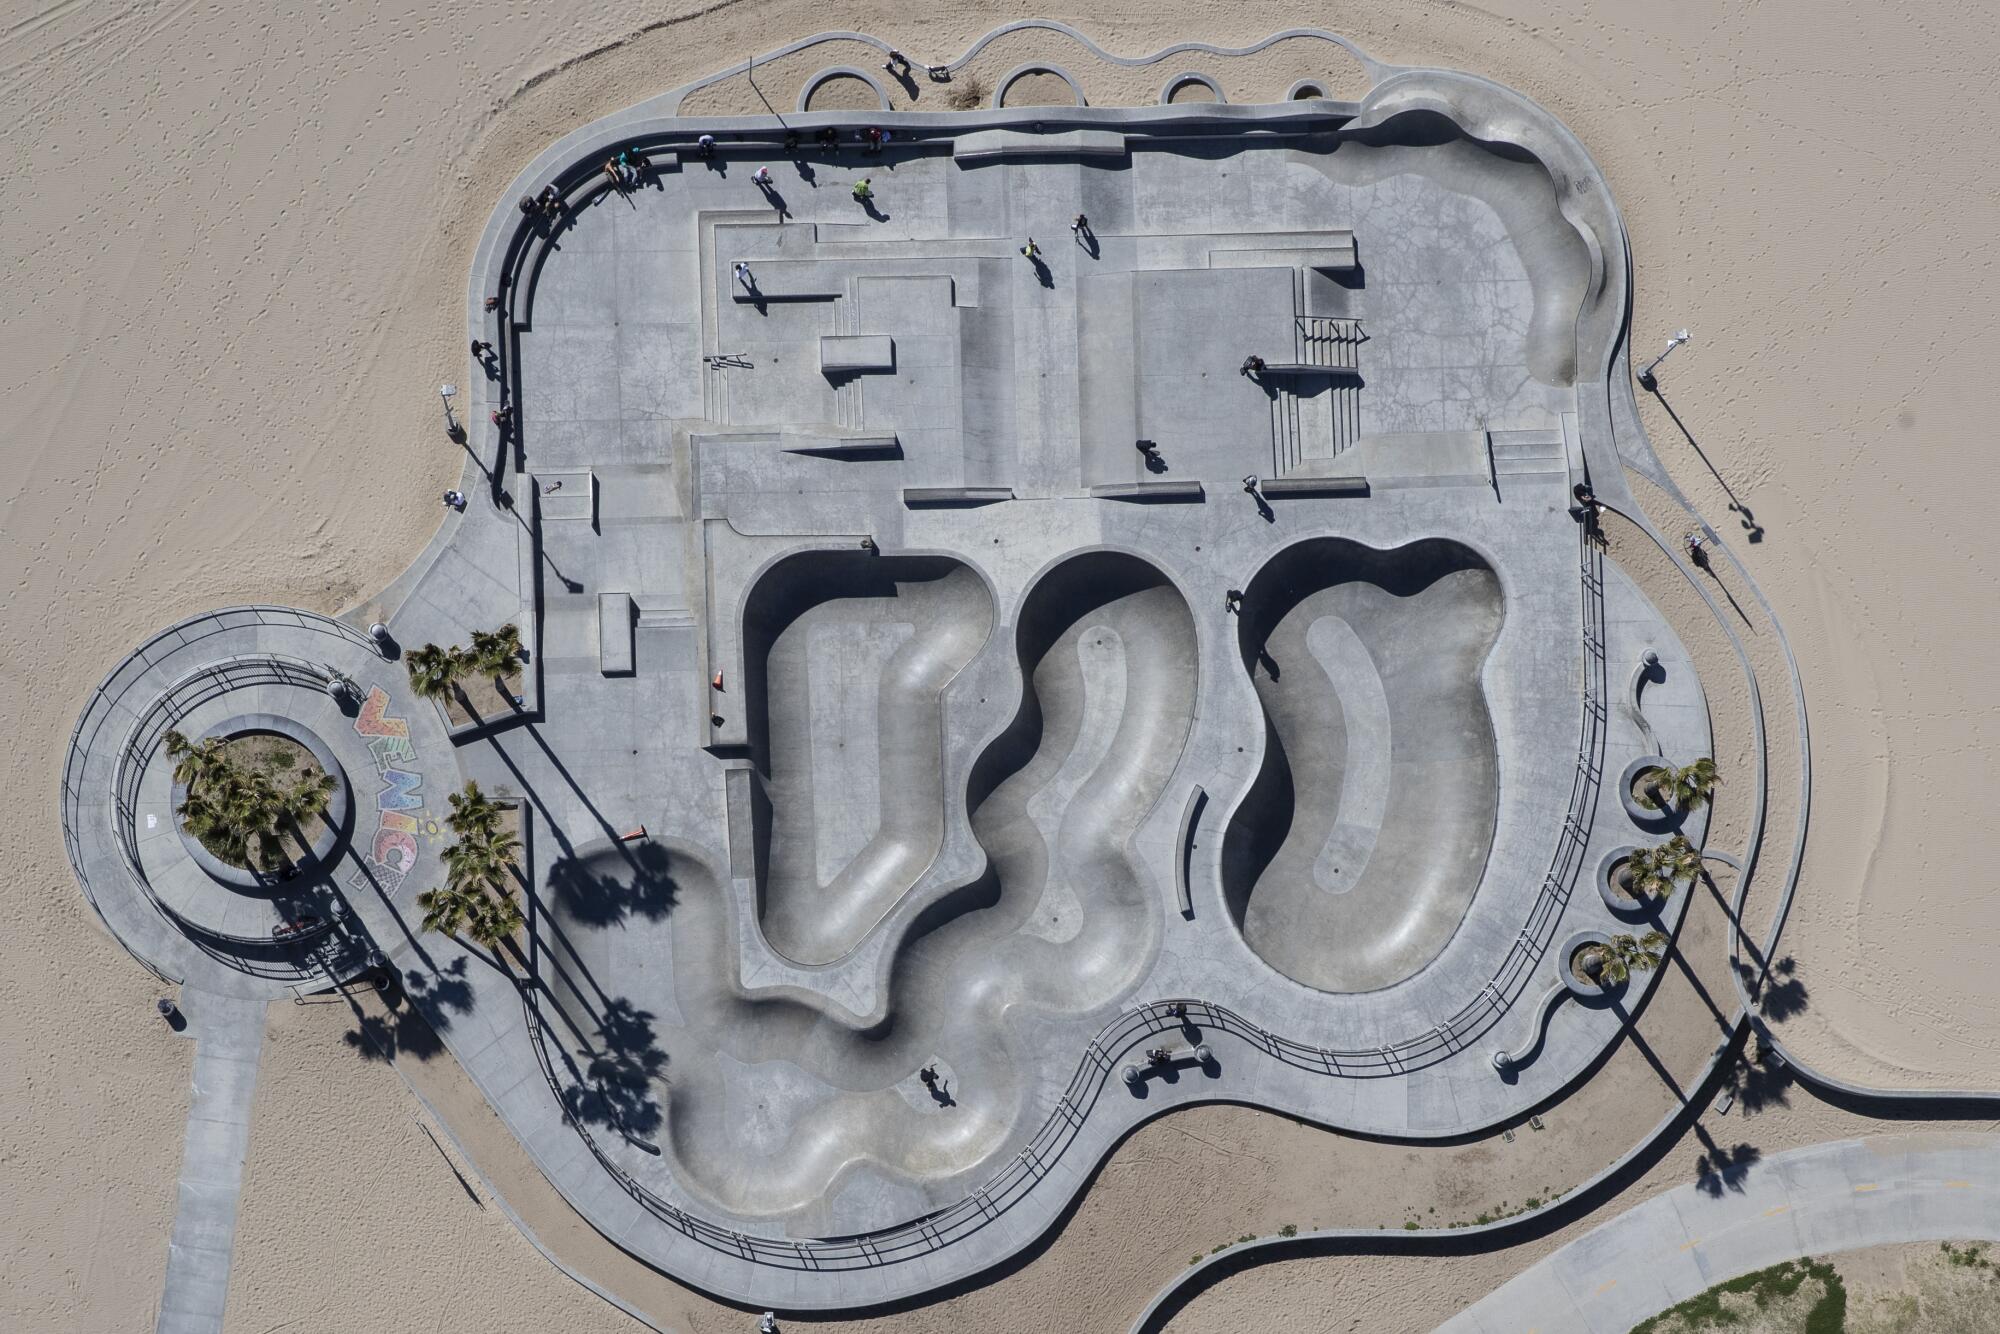 Aerial views of the Venice Beach skatepark where a handful of skaters defy the City's closure order.